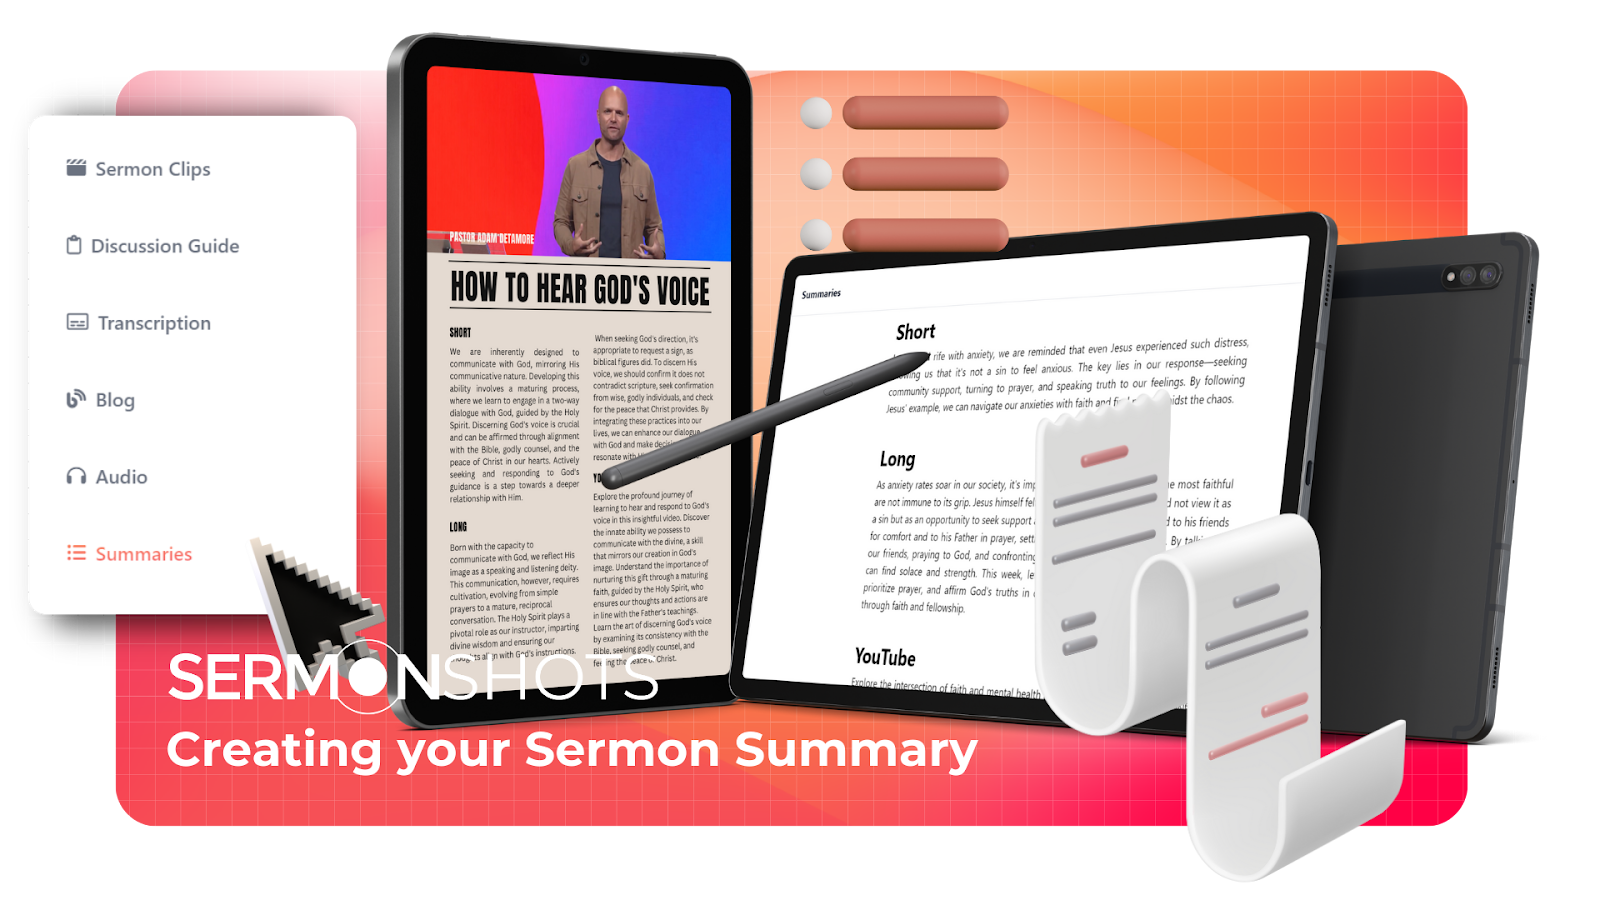 Graphic showing sermon shots sermon summary technology